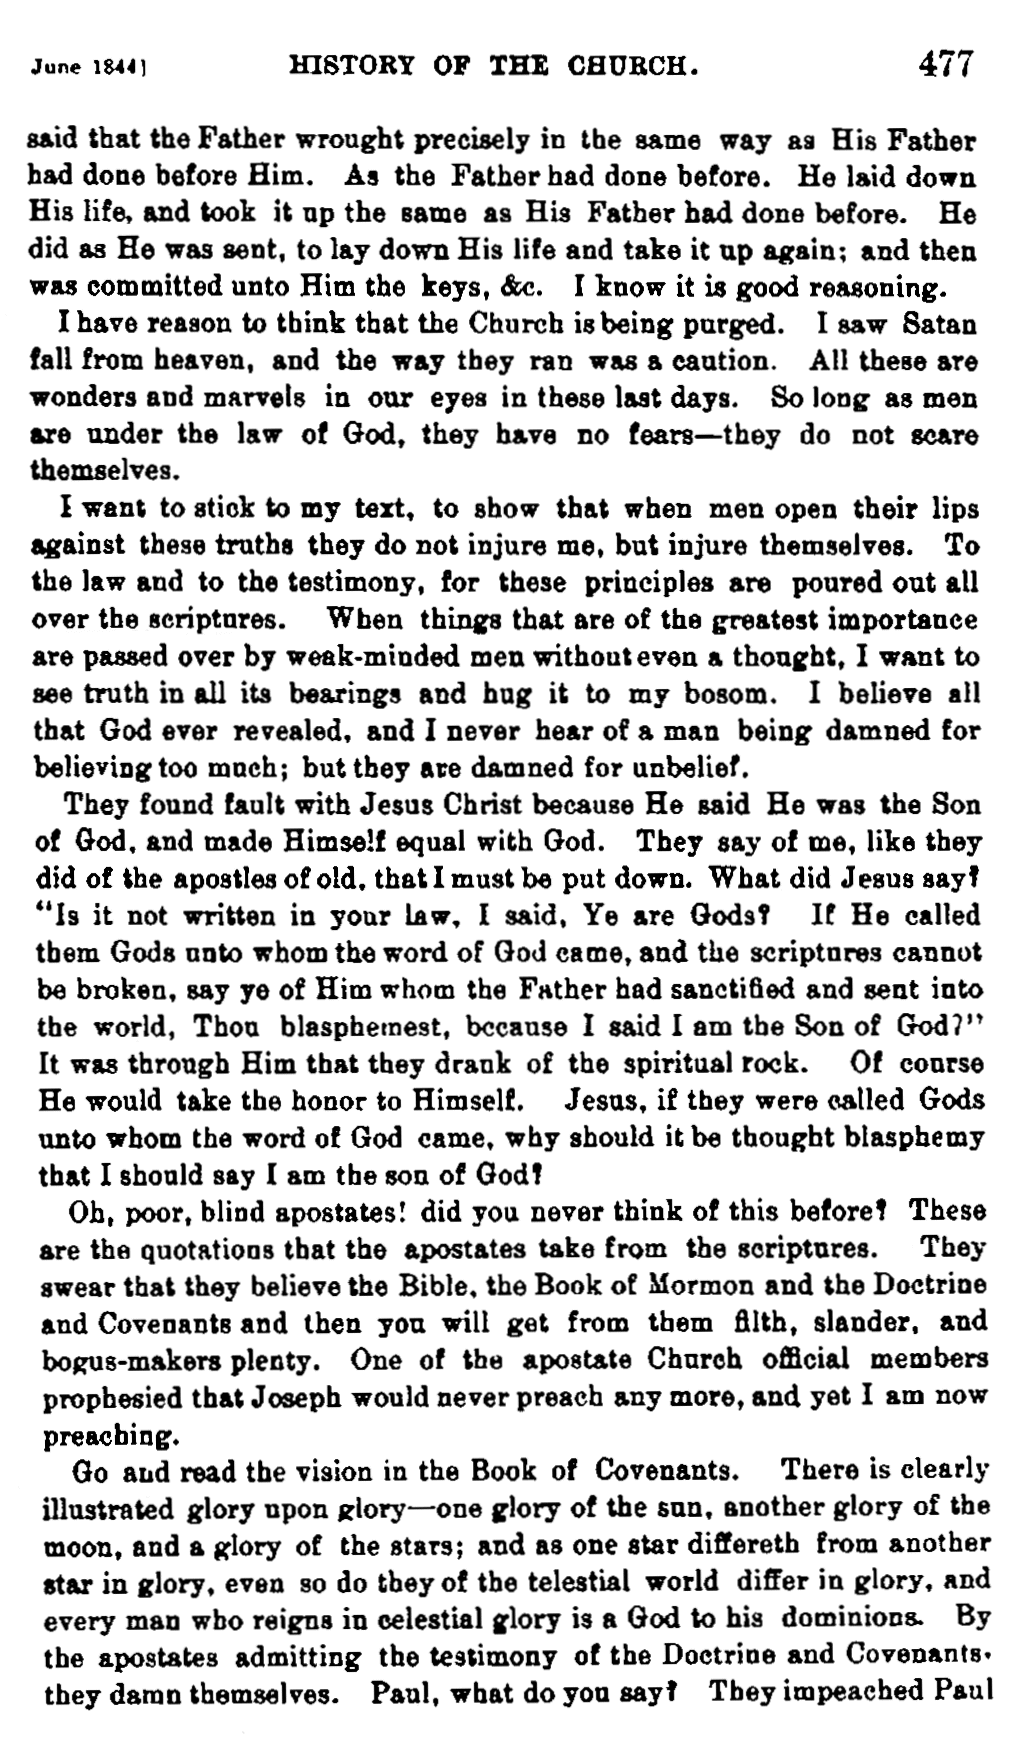  History of the Church, vol. 6, p. 477